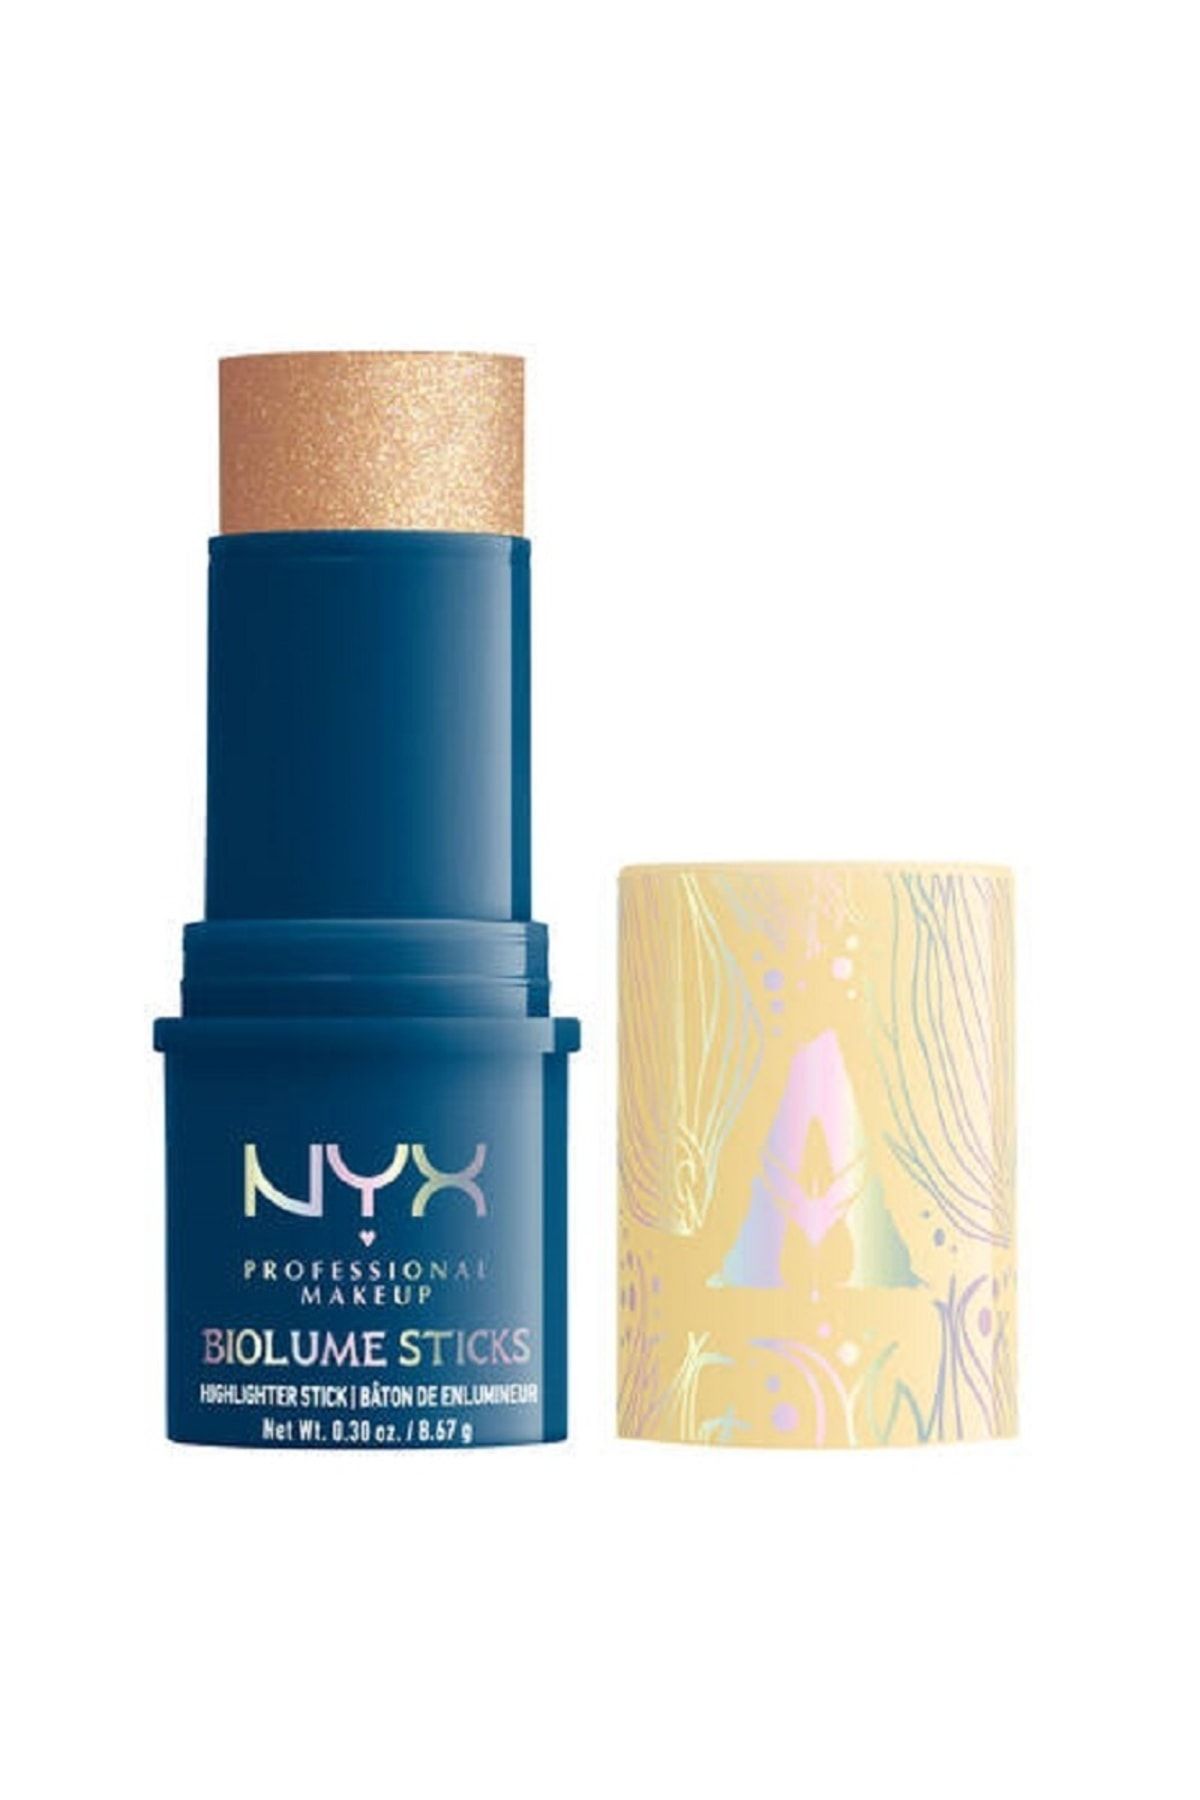 NYX Professional Makeup Avatar Suyun Yolu Biolume Sticks Face & Body Highlighter Sunrise Banshee Rise